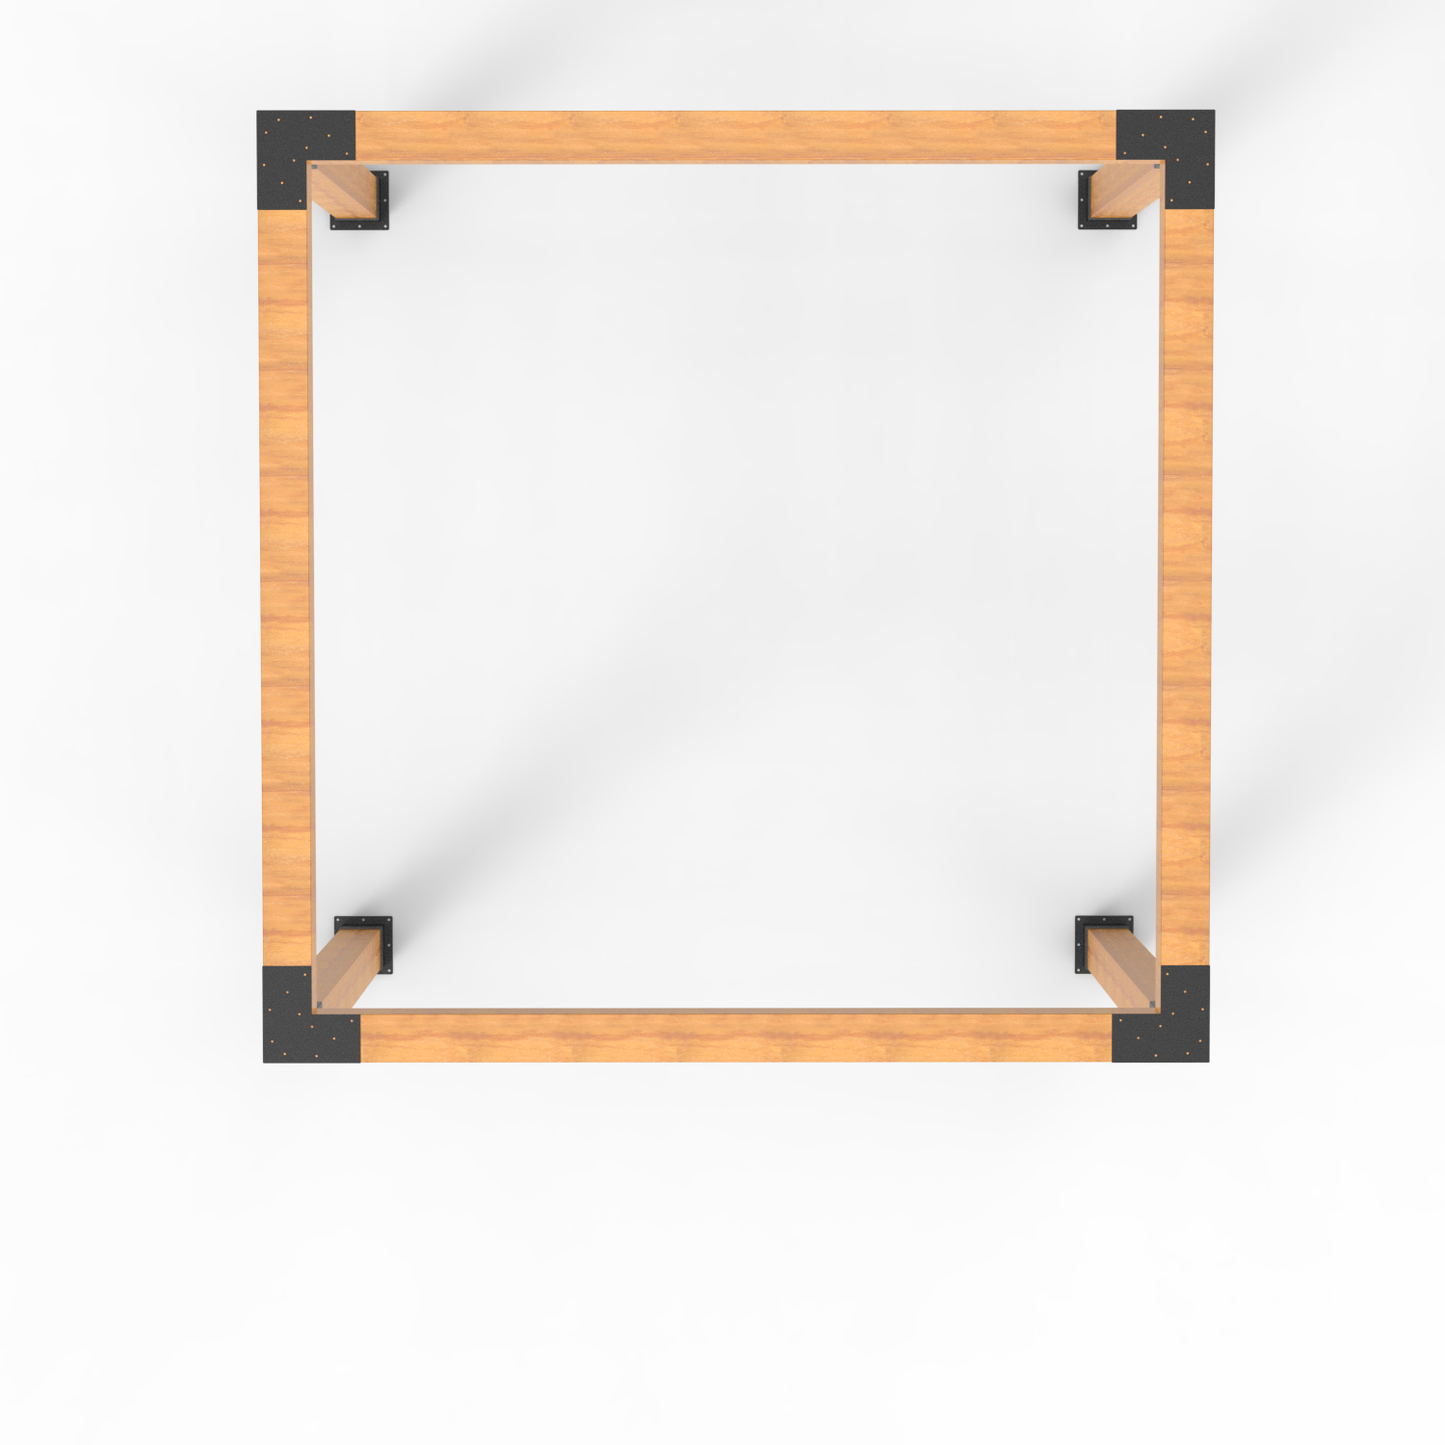 Pergola Kit for 6"X6" Wood Posts